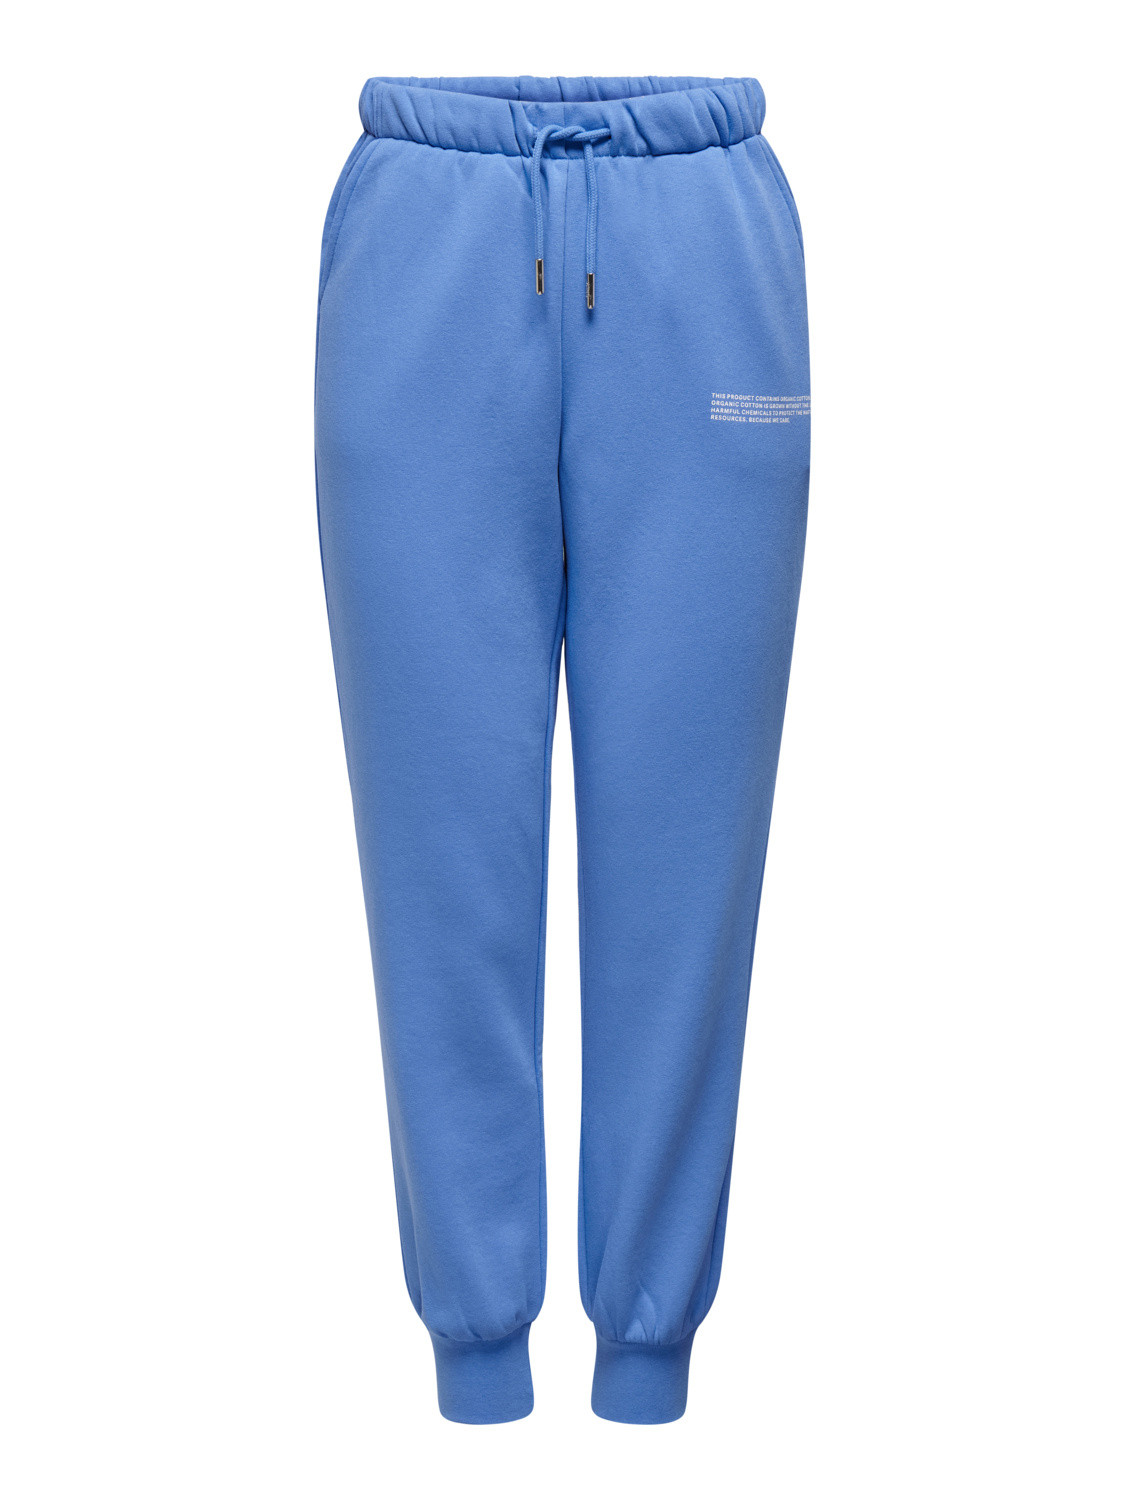 Women's sweatpants, Light Blue, large image number 0